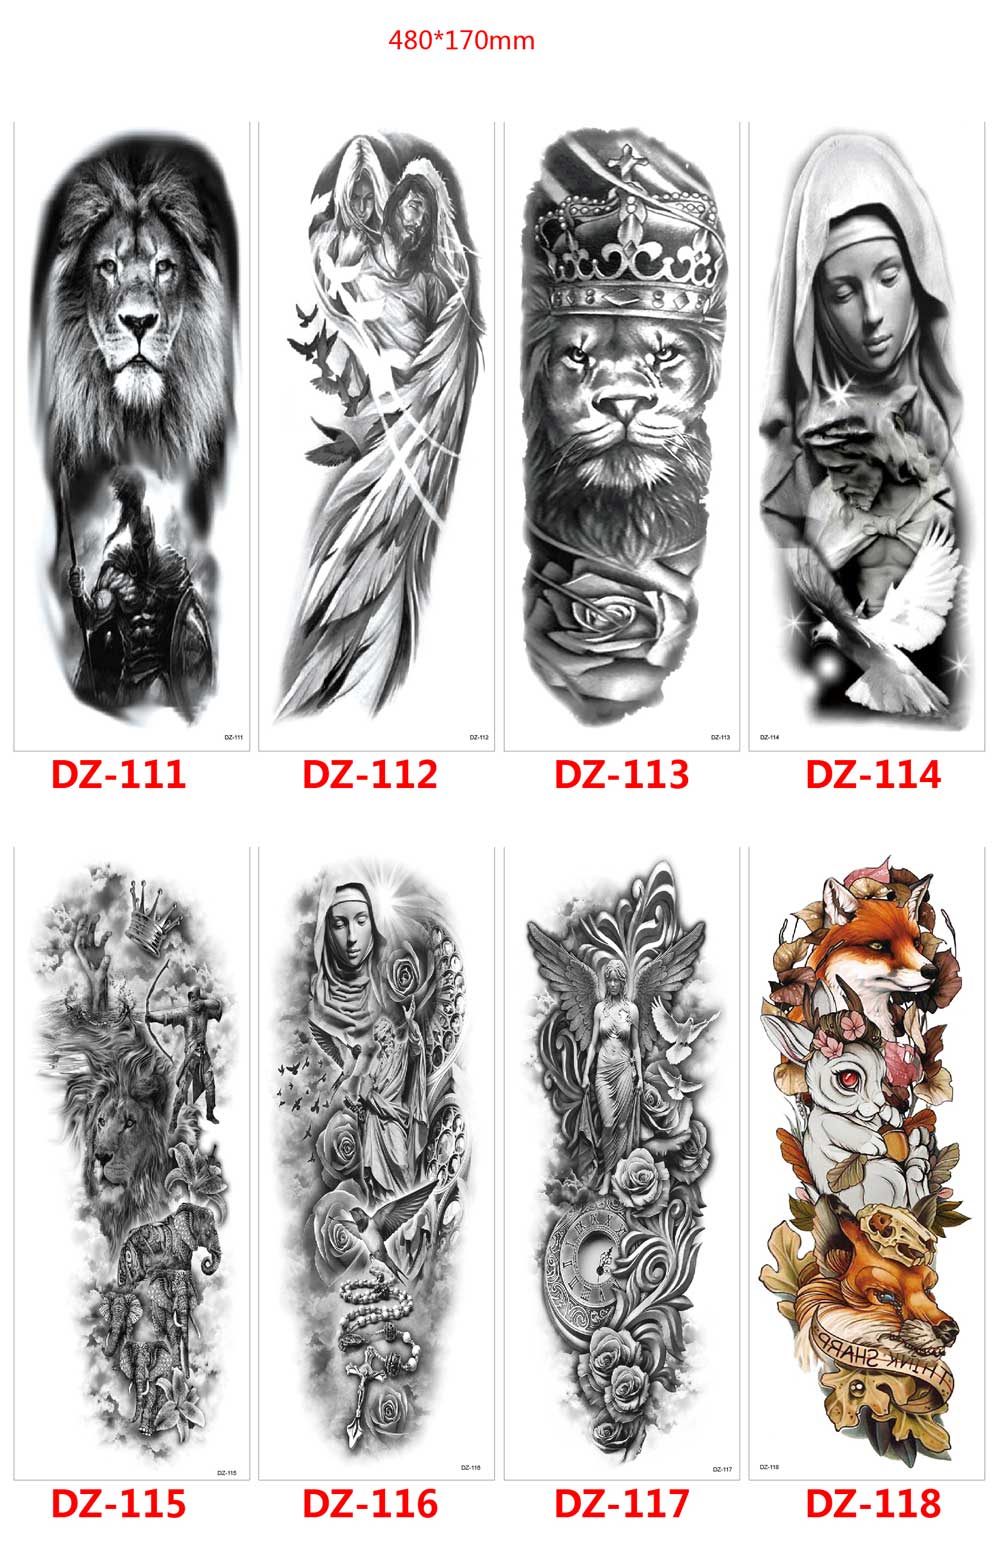 5 Sheet Full Arm Temporary Tattoo Jesus Queen Skeleton Lion King